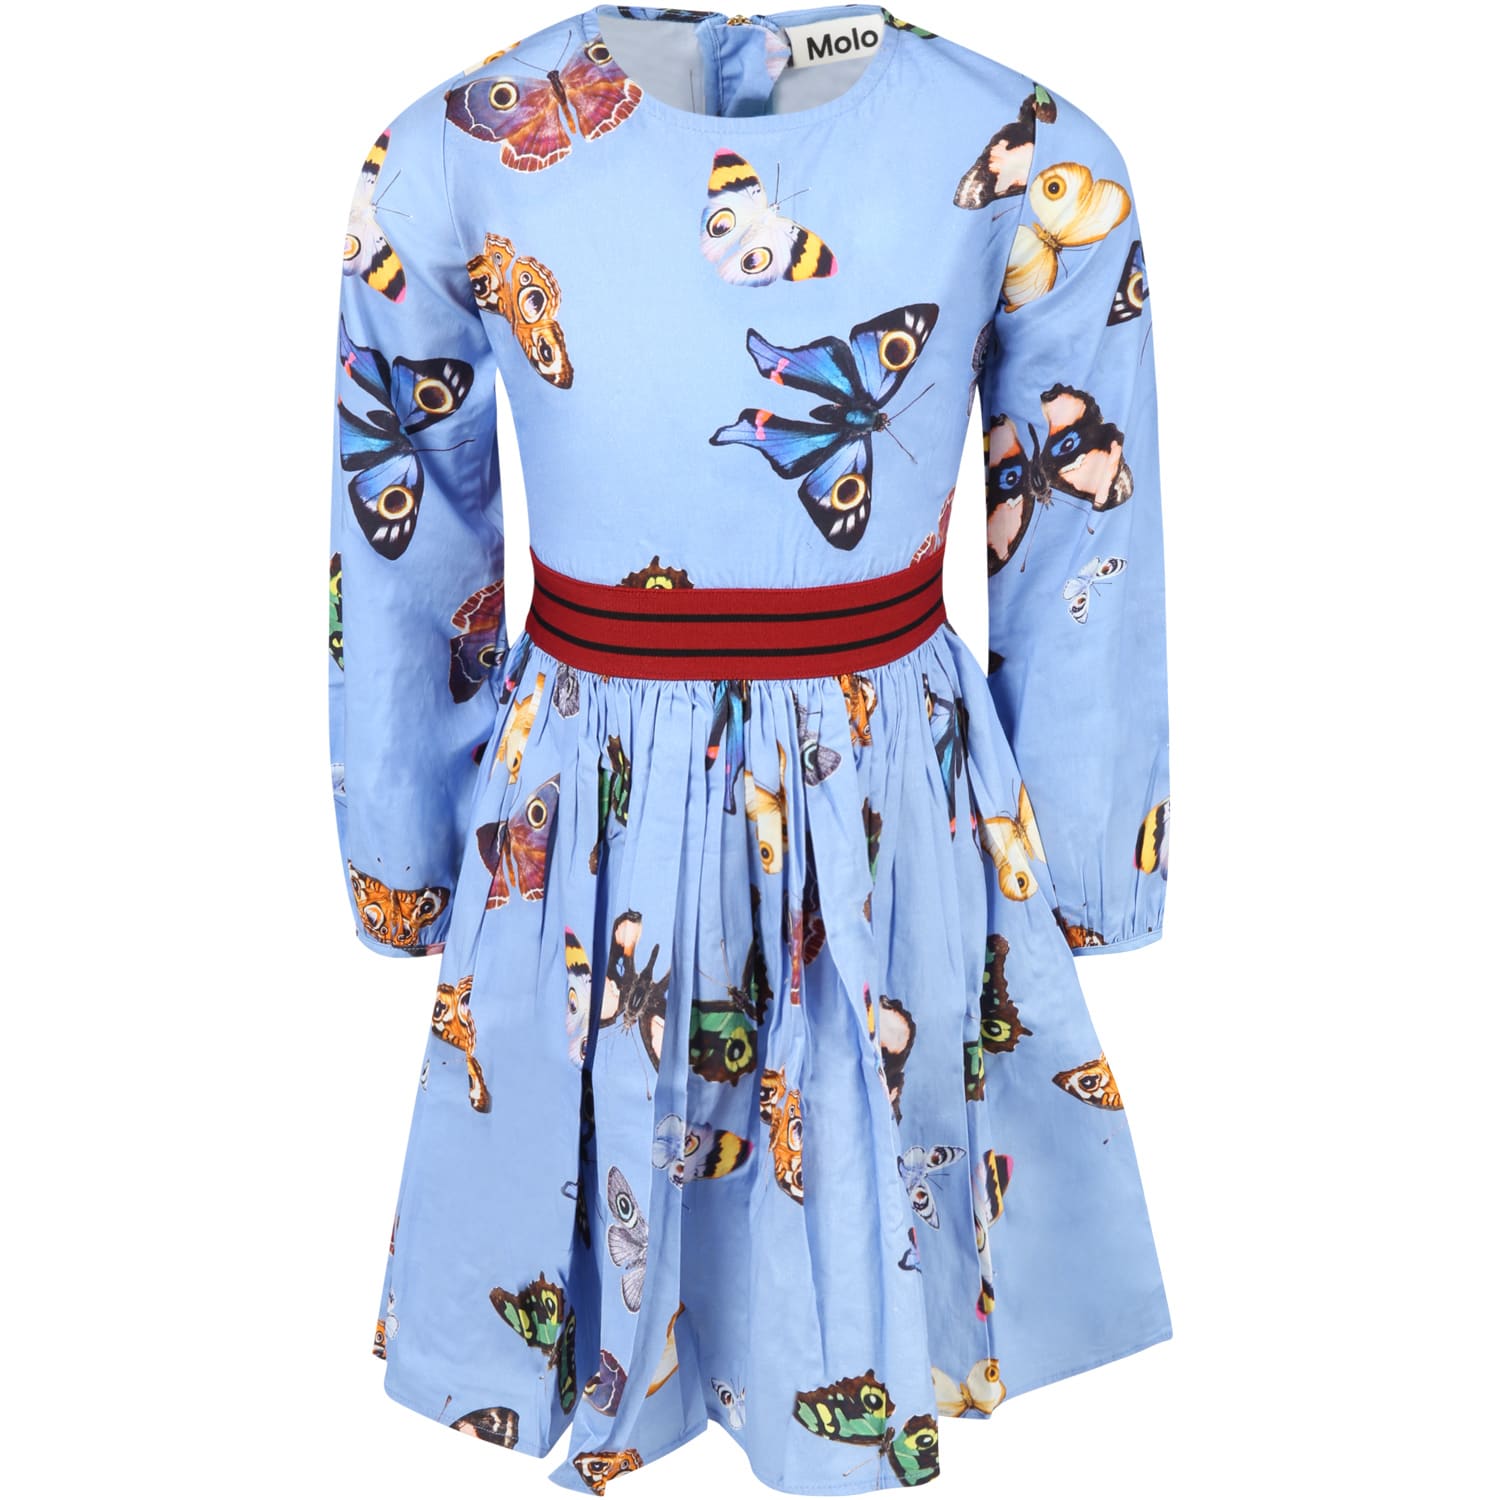 Molo Light-blue Dress For Girl With Butterflies